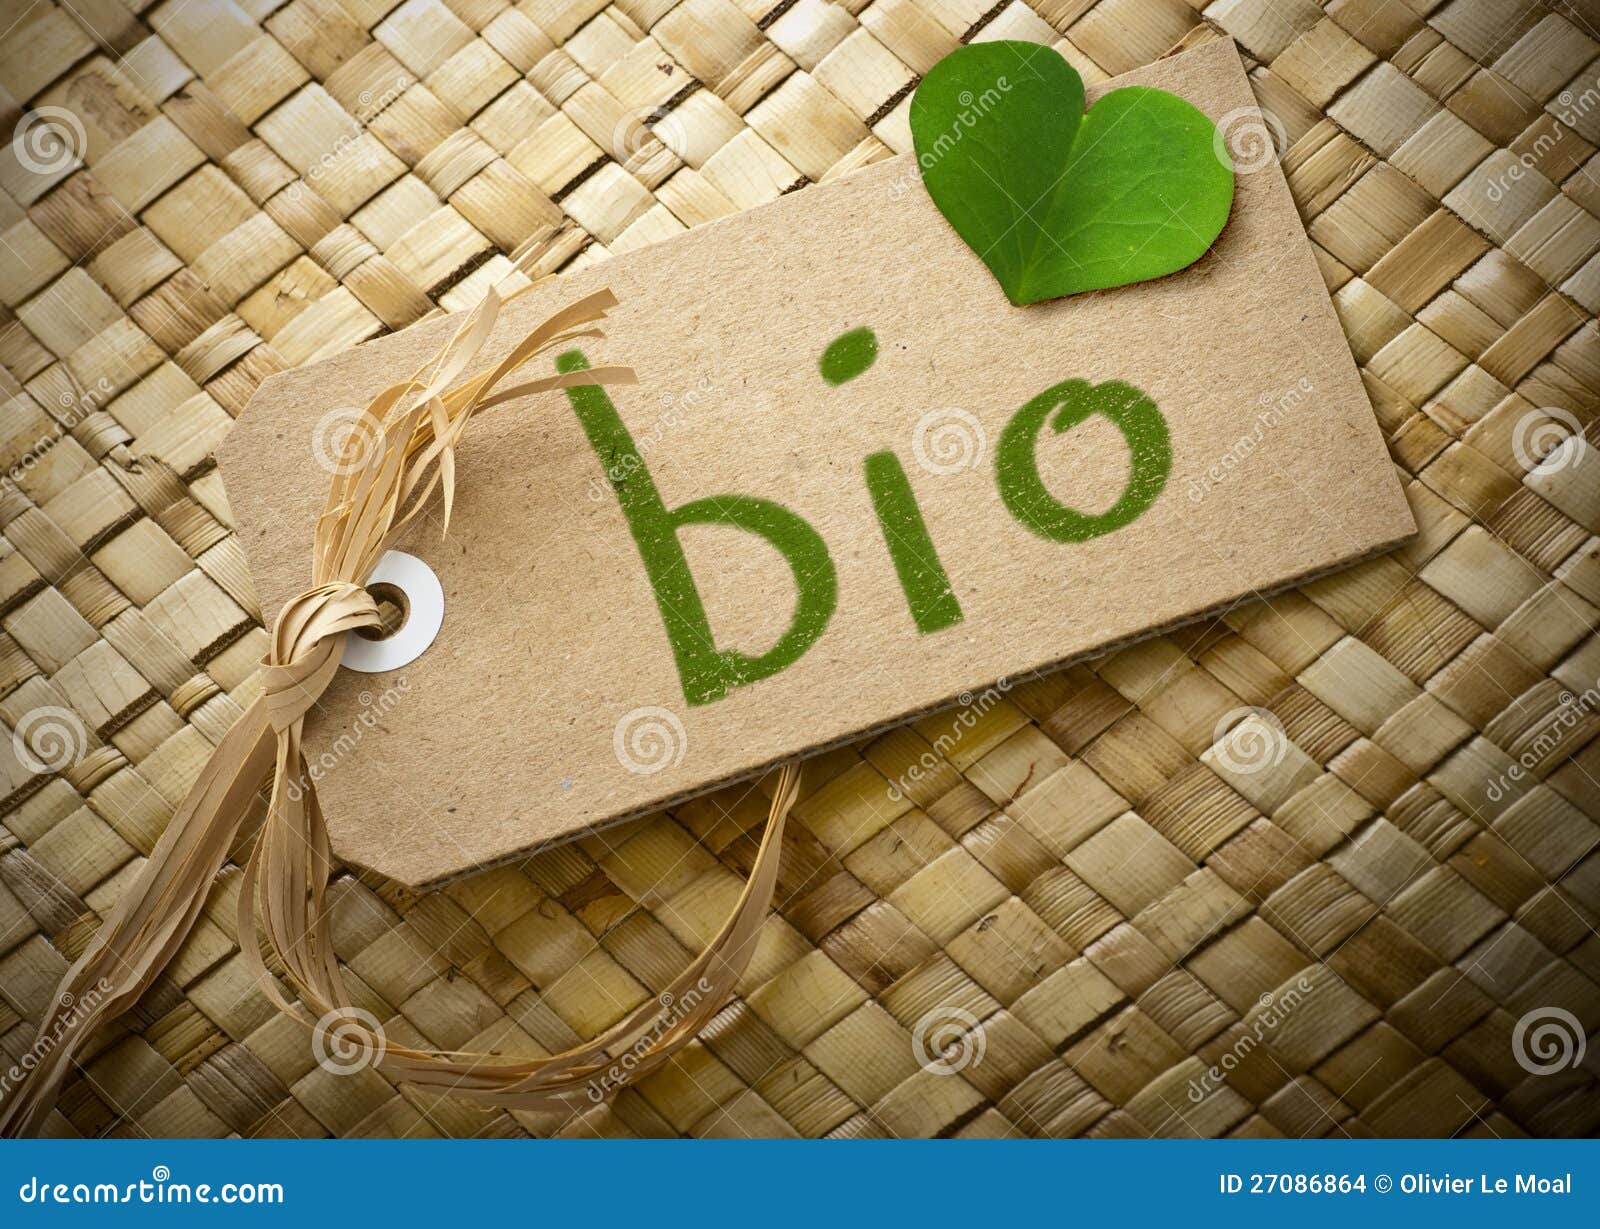 natual cardboard label with the word bio